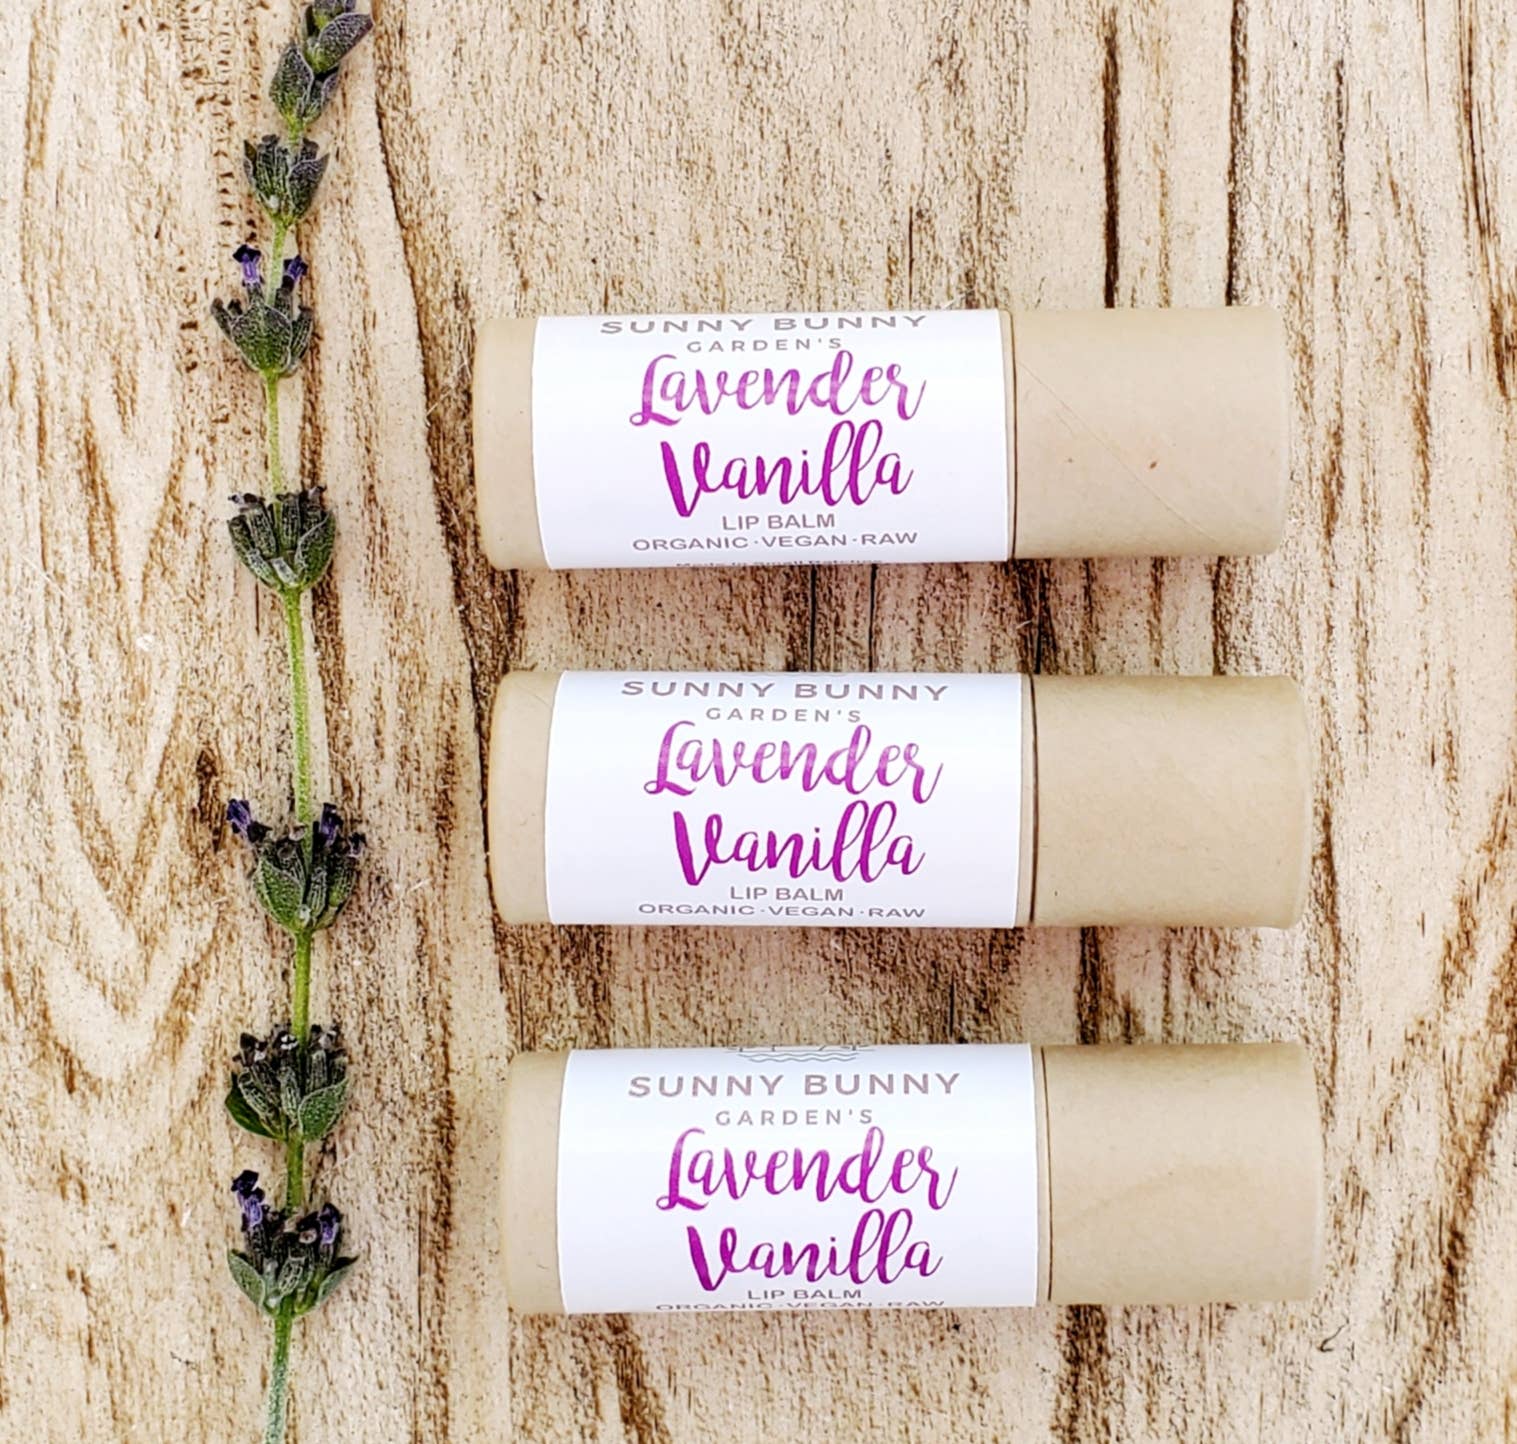 Lavender Vanilla Organic Vegan Lip Balm by Sunny Bunny Gardens. Organic lip balm. Made in USA Lip Balm.